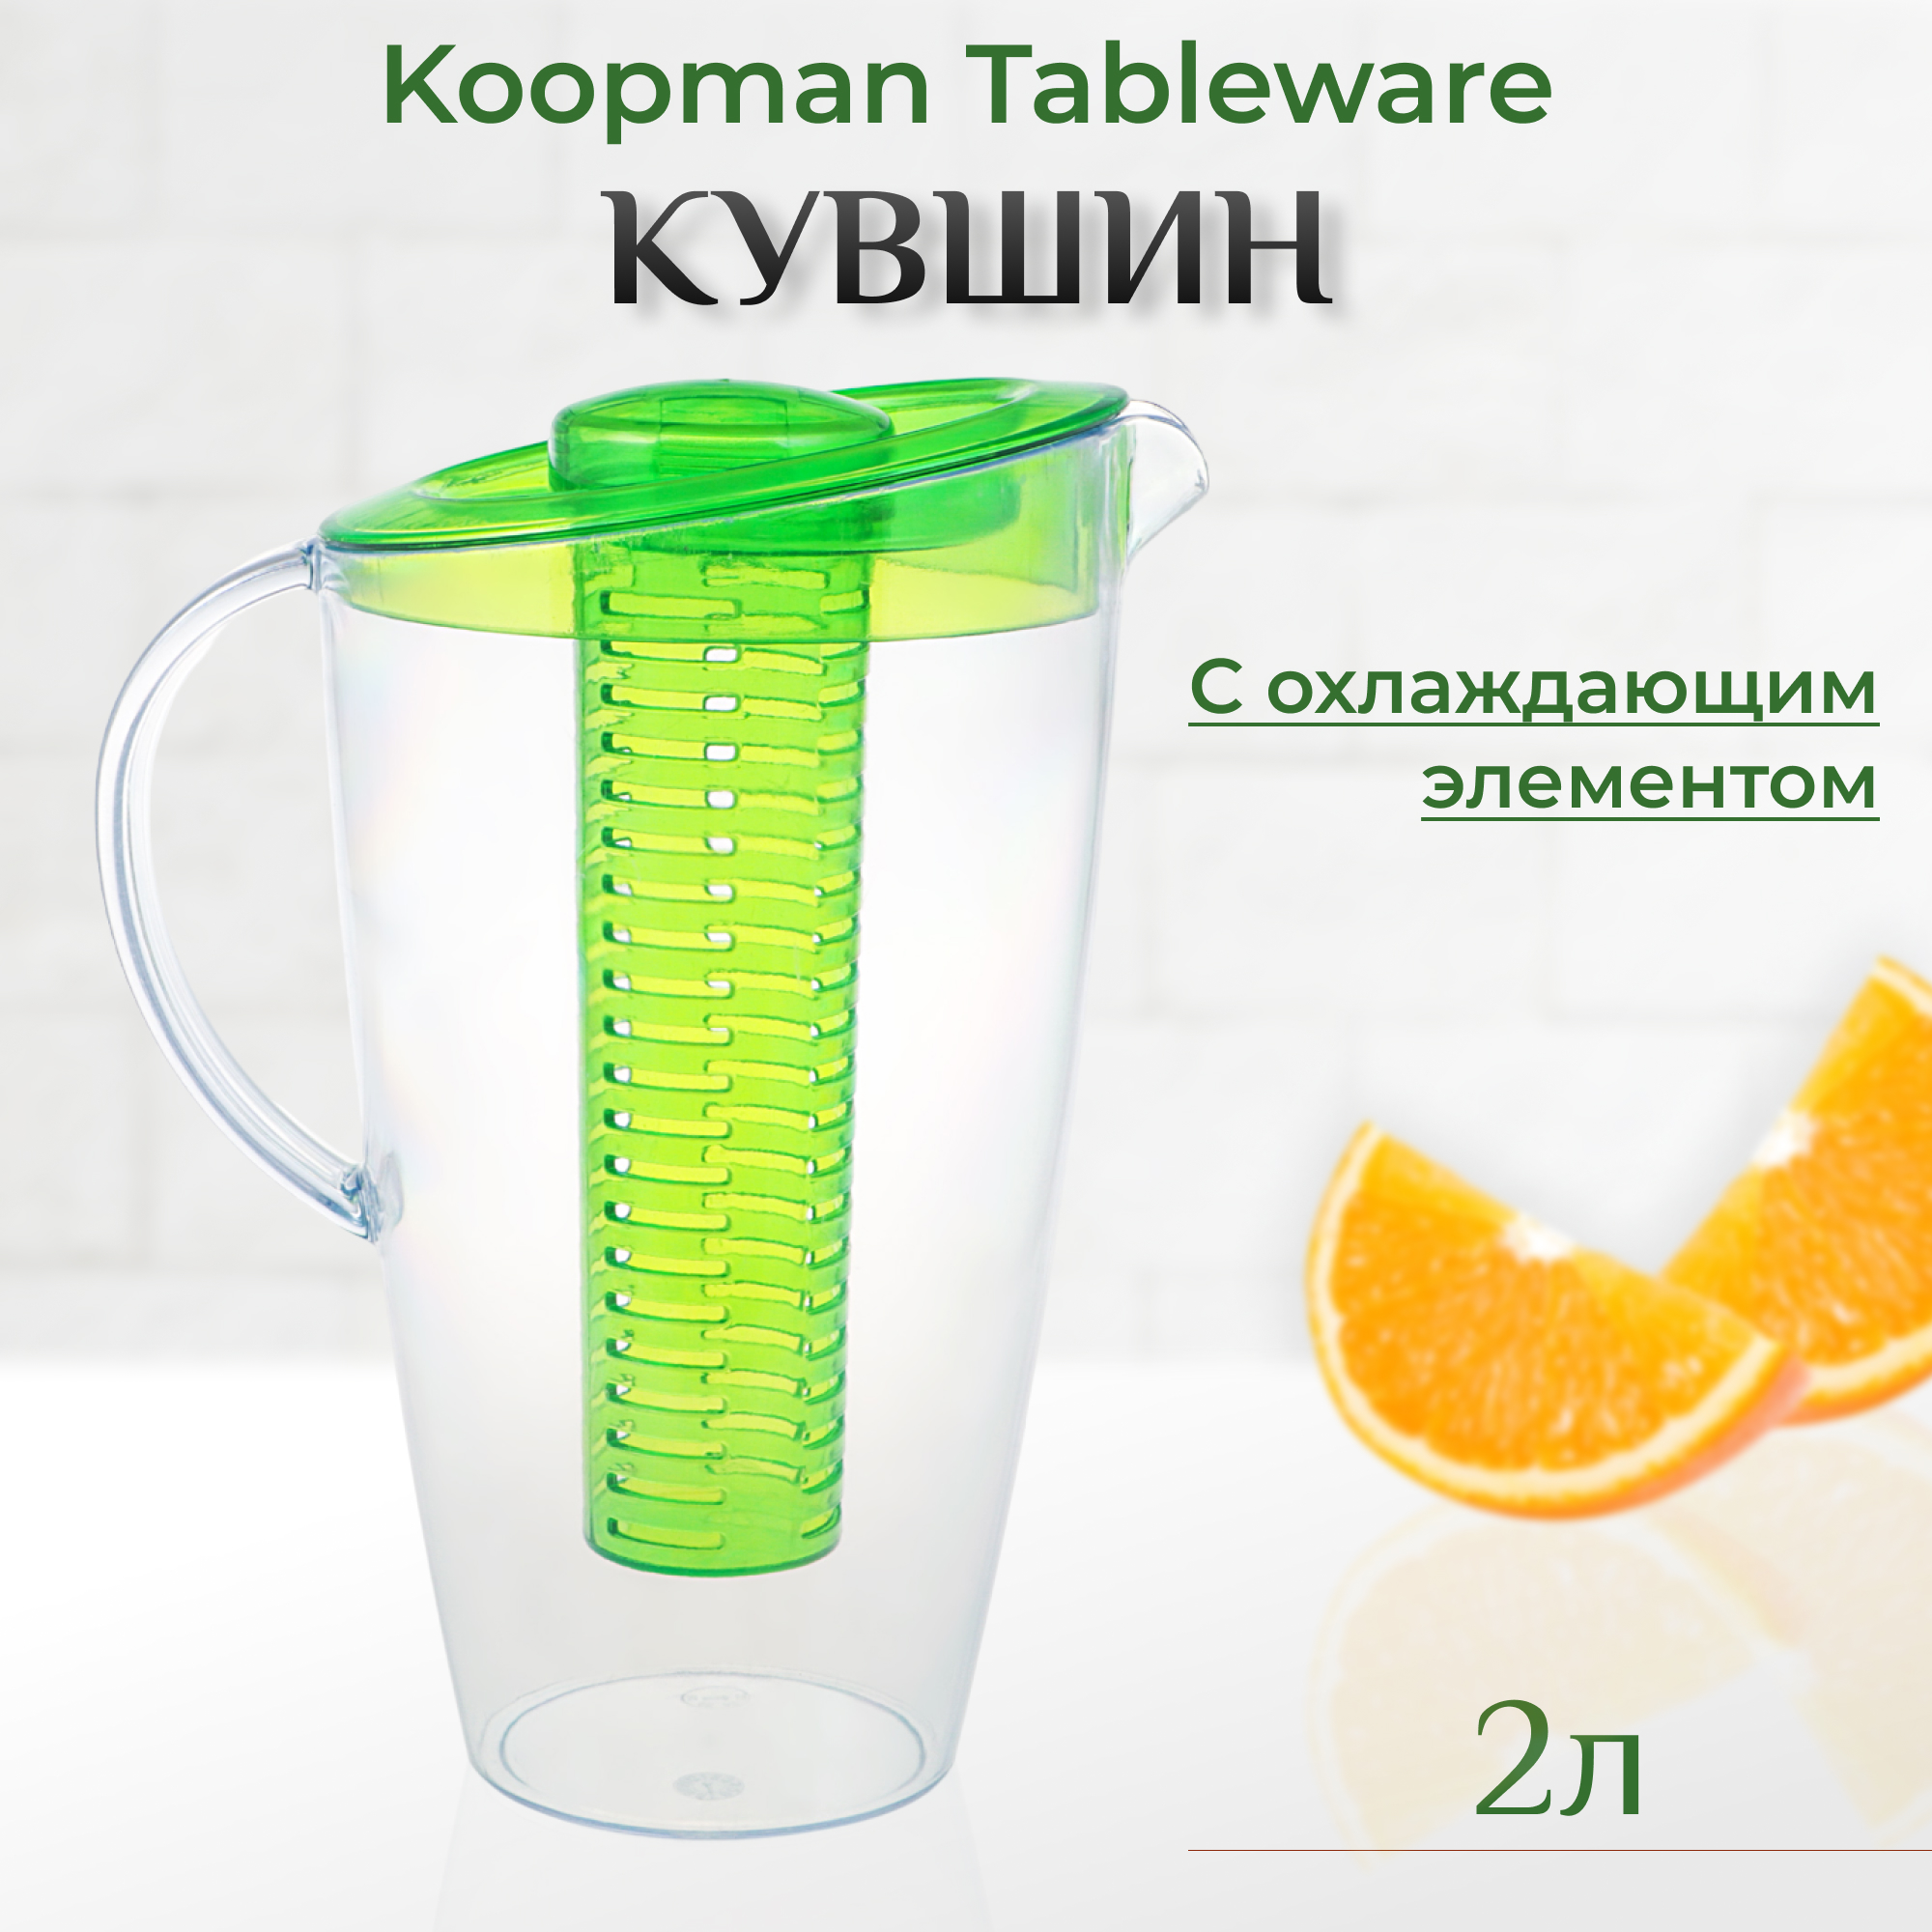 фото Кувшин с охлаждающим элементом koopman tableware